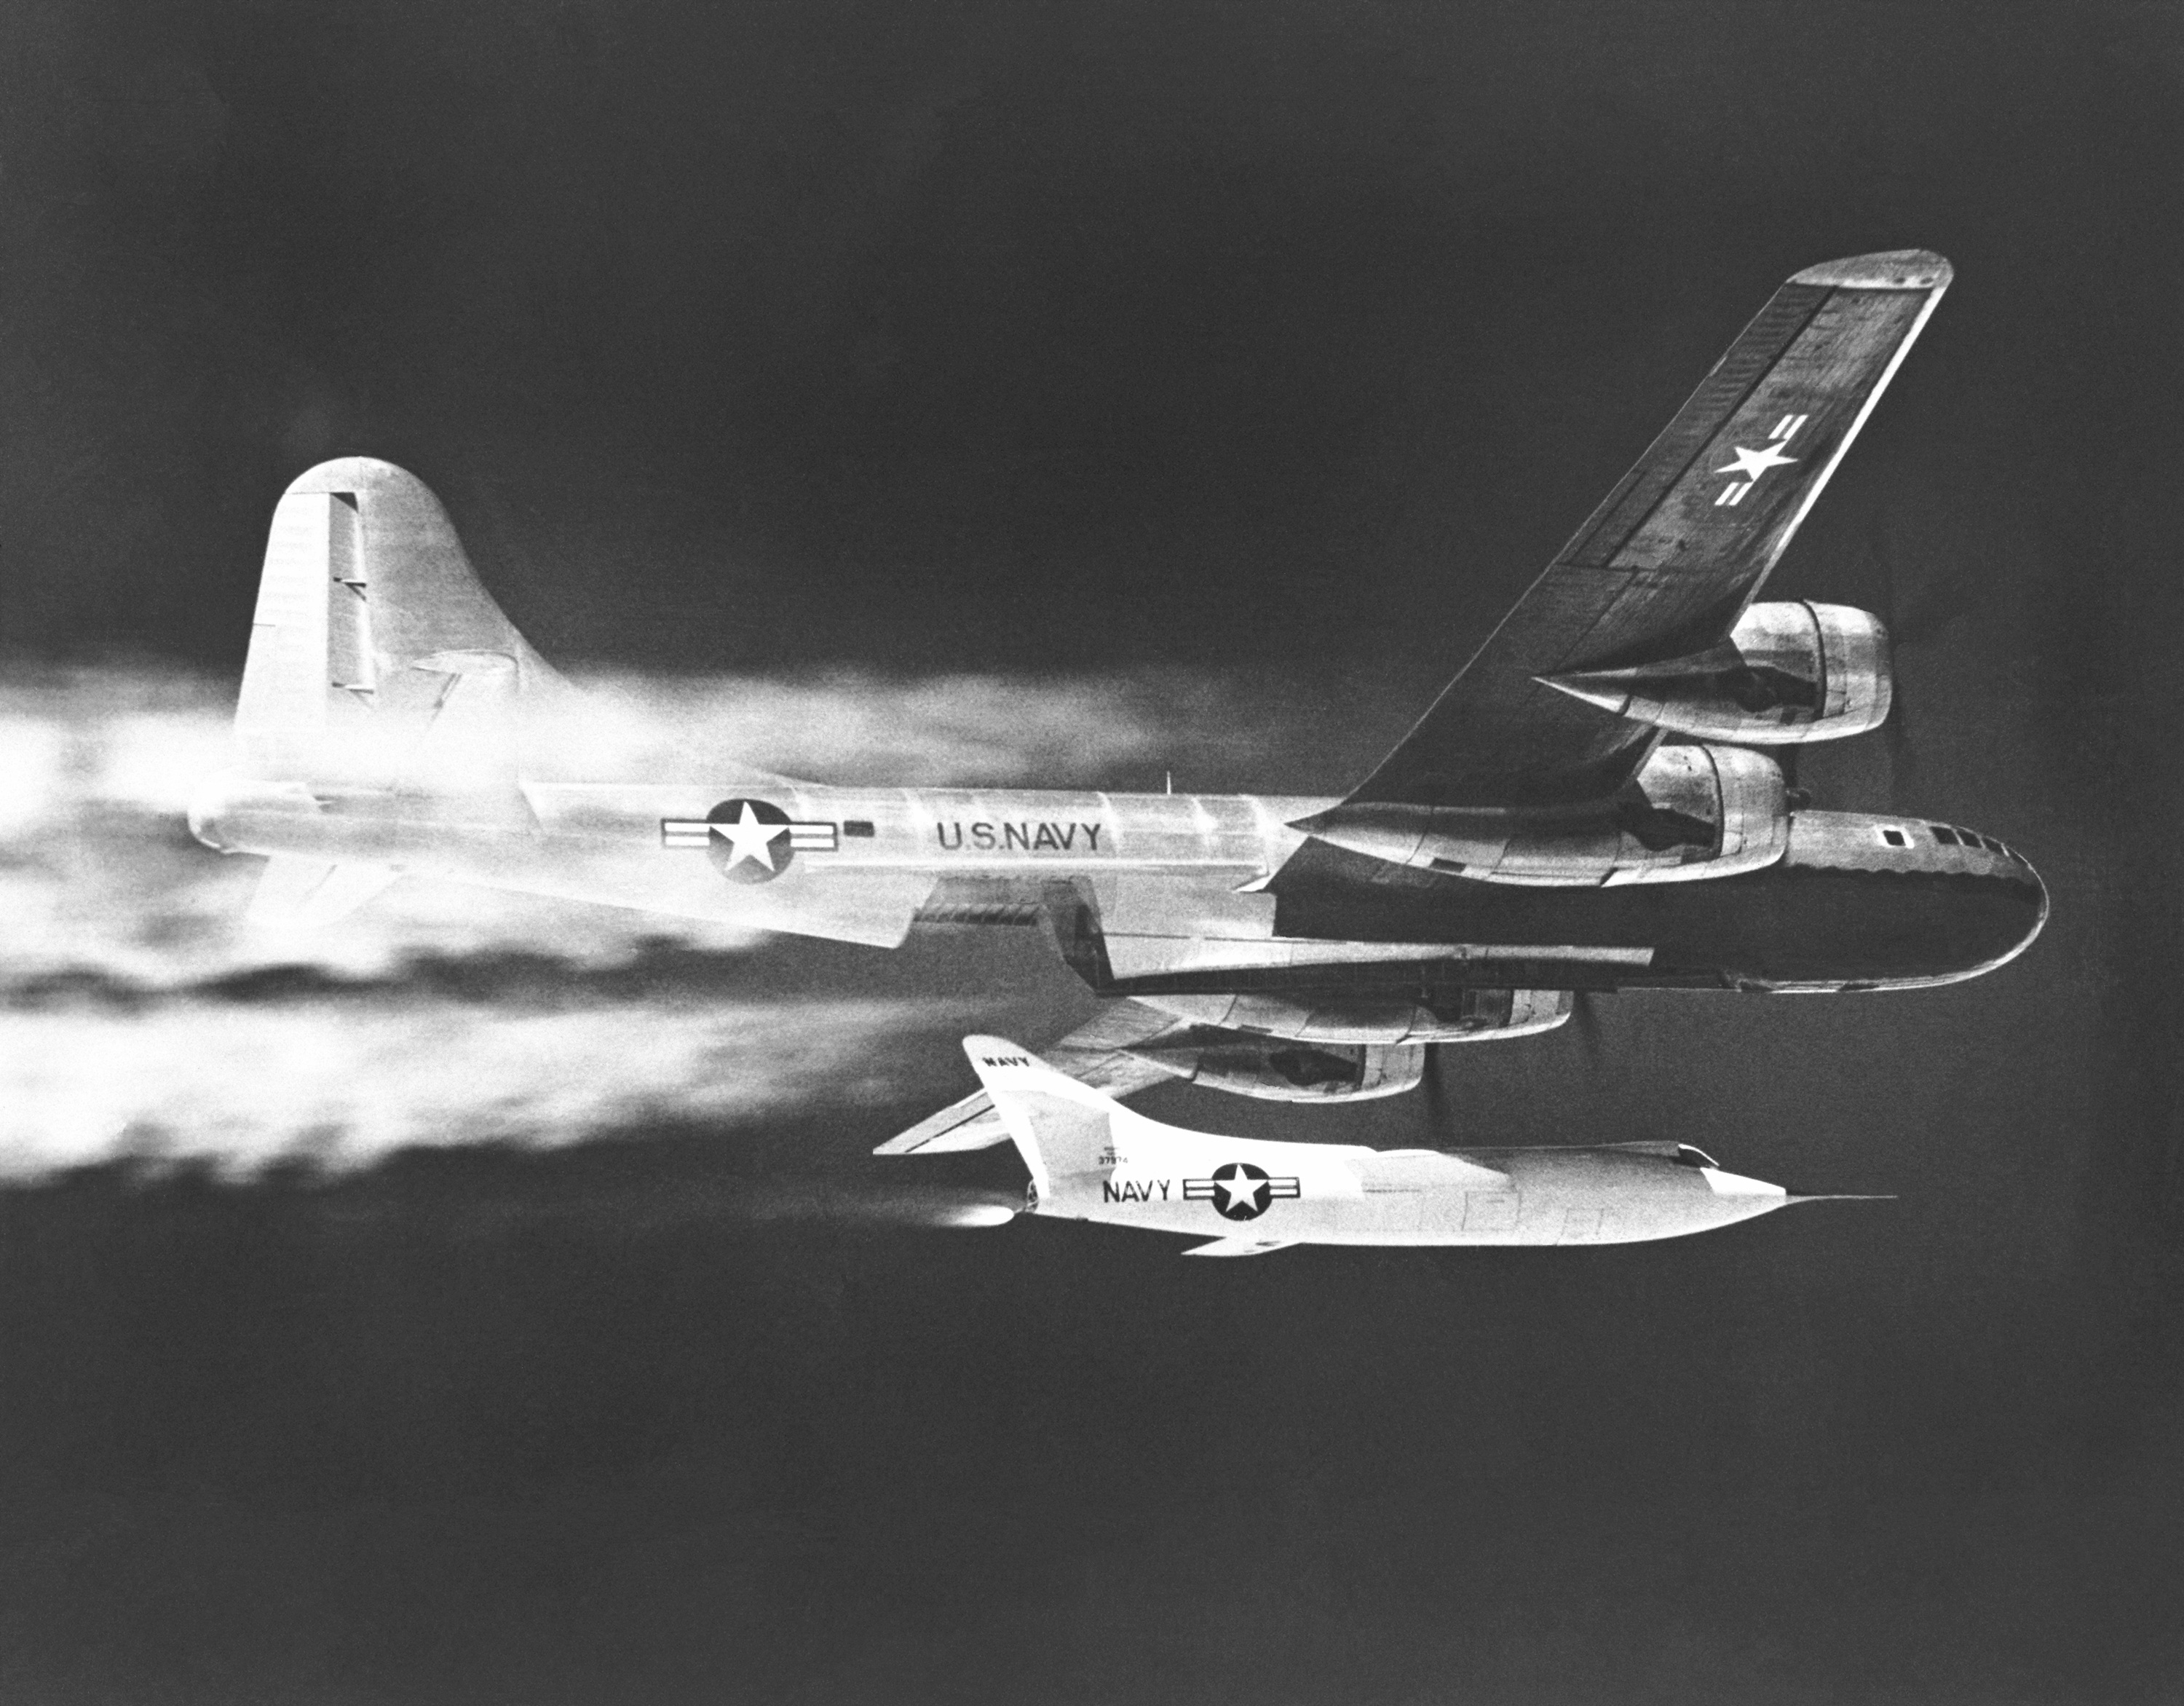 Douglas D-558-II Skyrocket, Bu. No., 37974, NACA 144, is dropped from the Boeing P2B-1S Superfortress, Bu. No. 84029, NACA 137. (NASA)